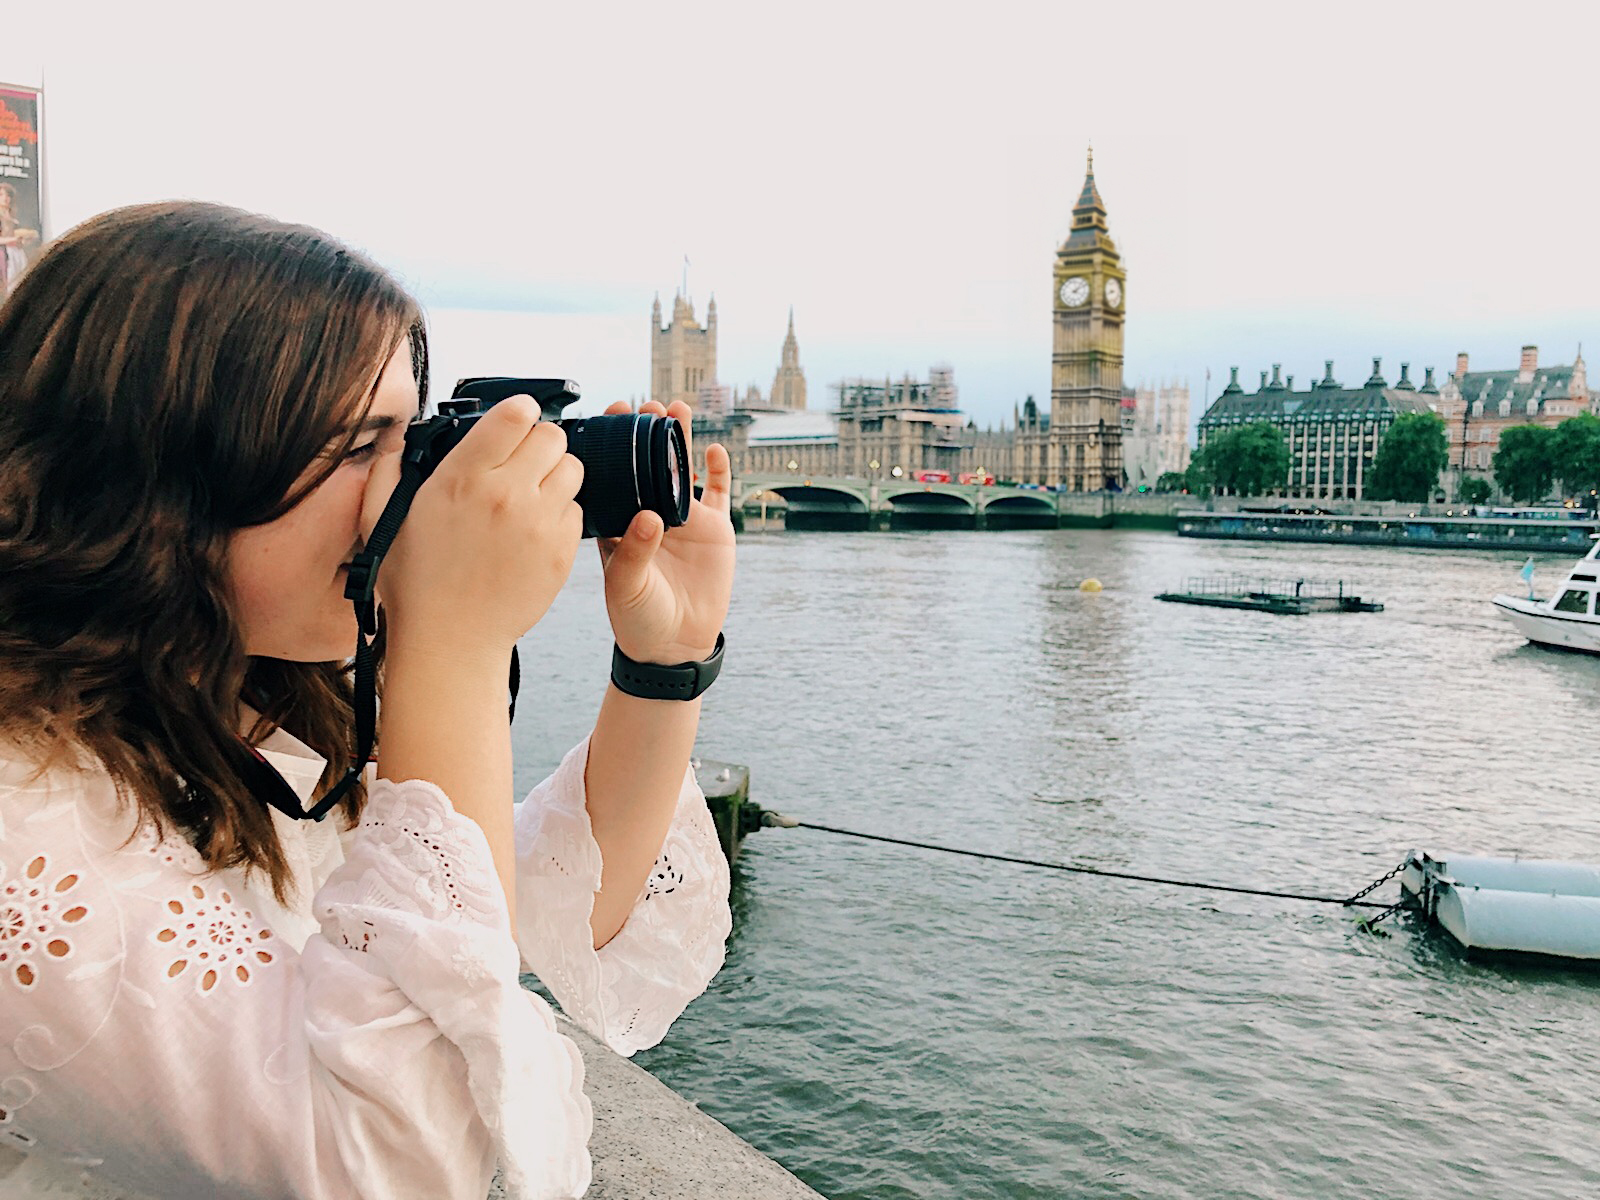 intern taking photo during in-person internship in London